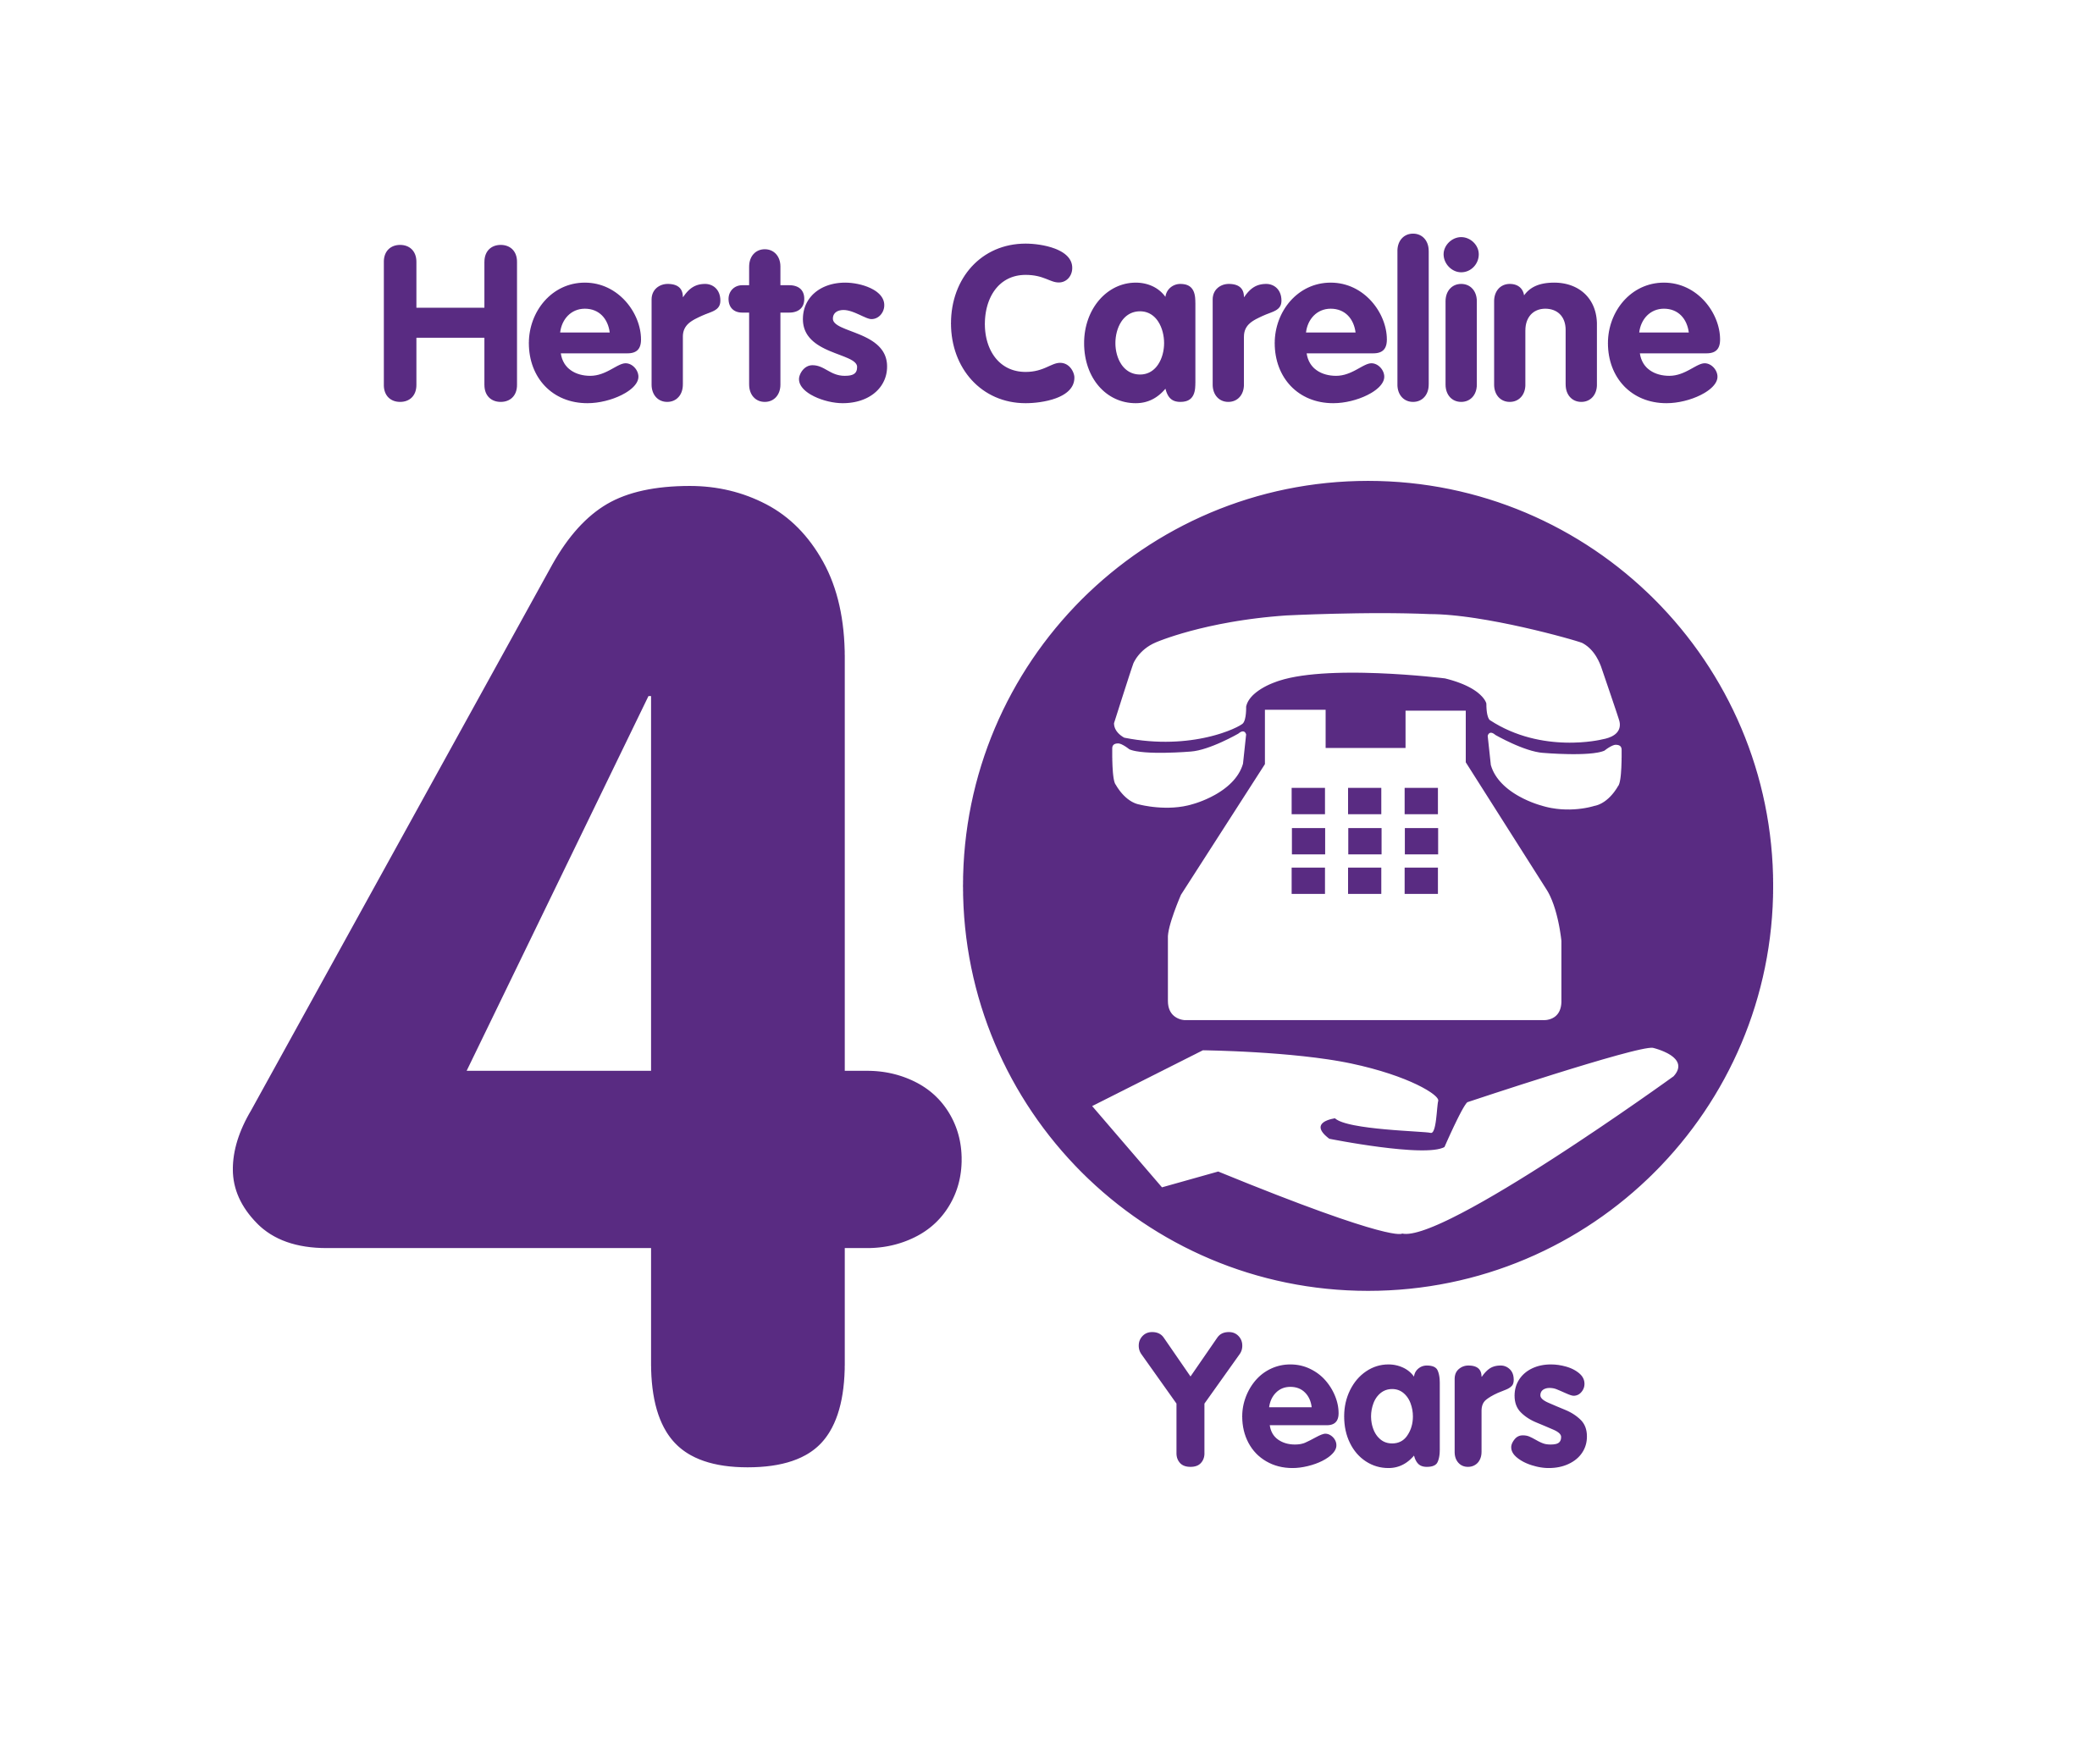 NHDC-524 Careline 40th Anniversary logo-FINAL